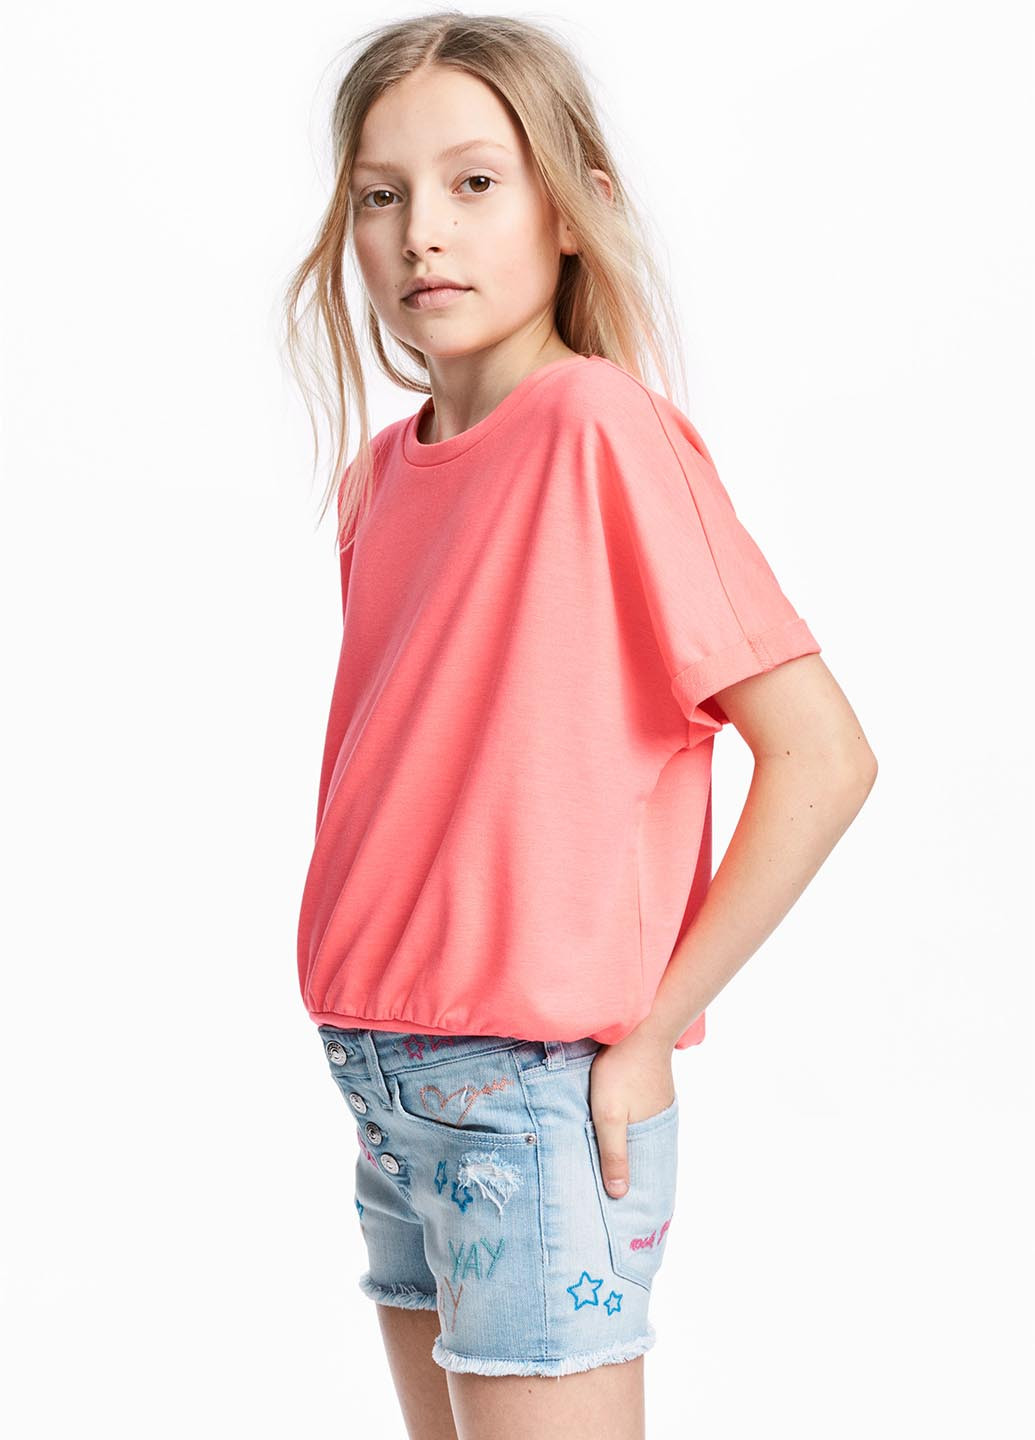 Розовая блузка с коротким рукавом H&M летняя